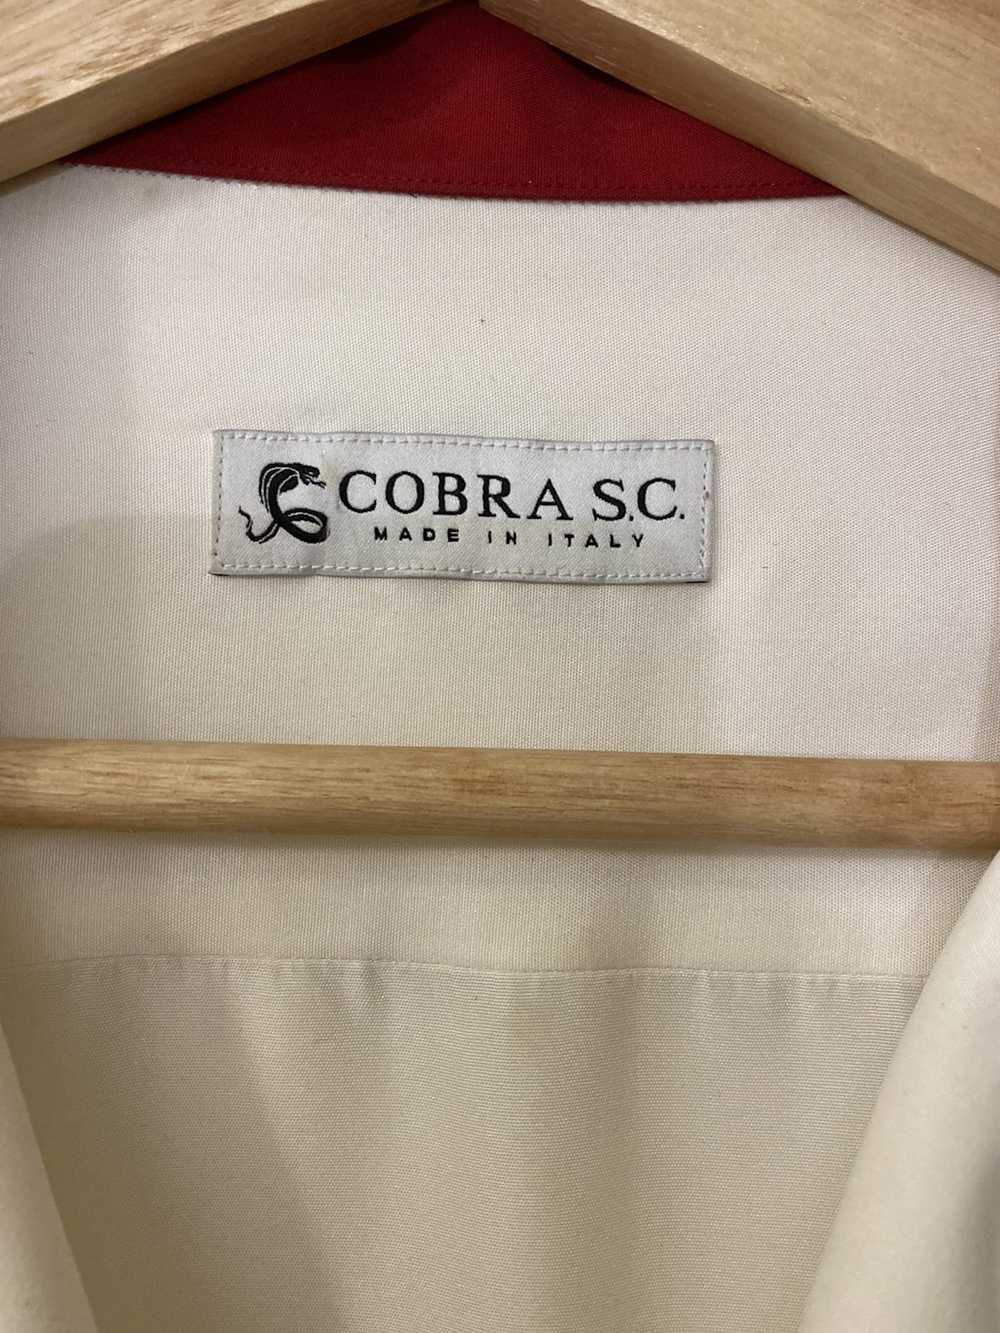 Cobra Silk pajama shirt - image 2